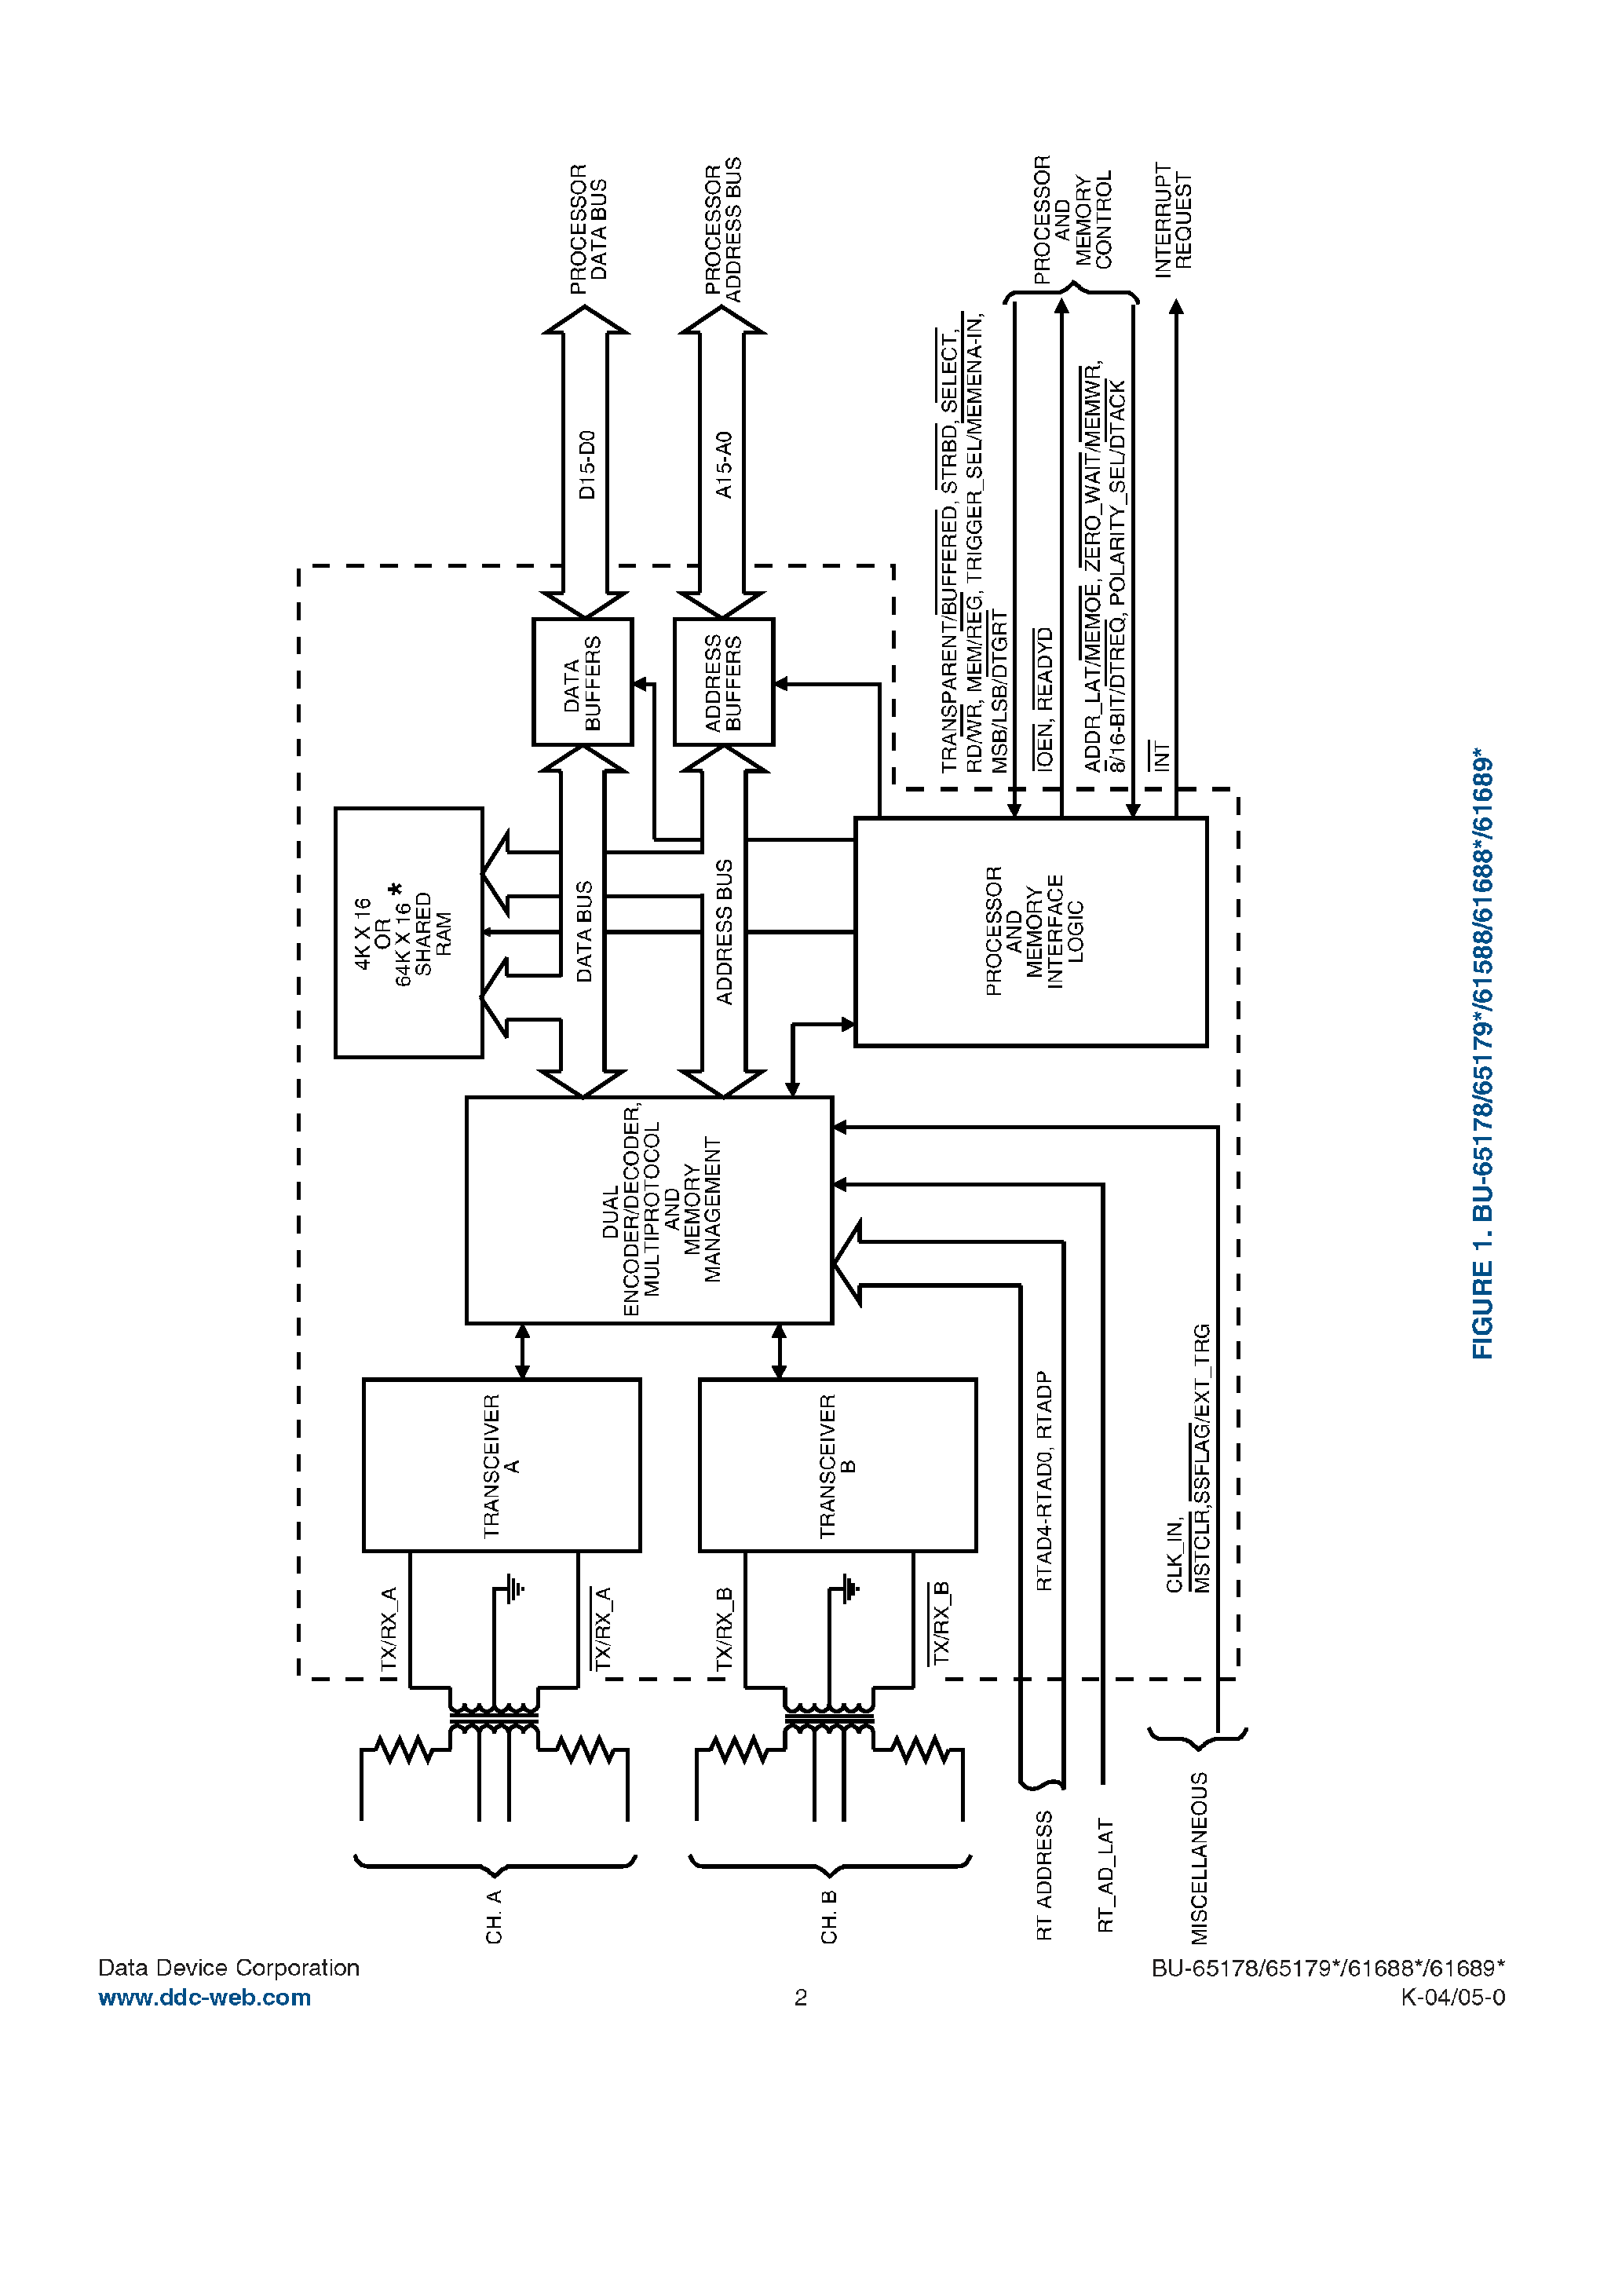 Даташит BU-65179 - Miniature Advanced Communication Engine and Mini-Ace Plus страница 2